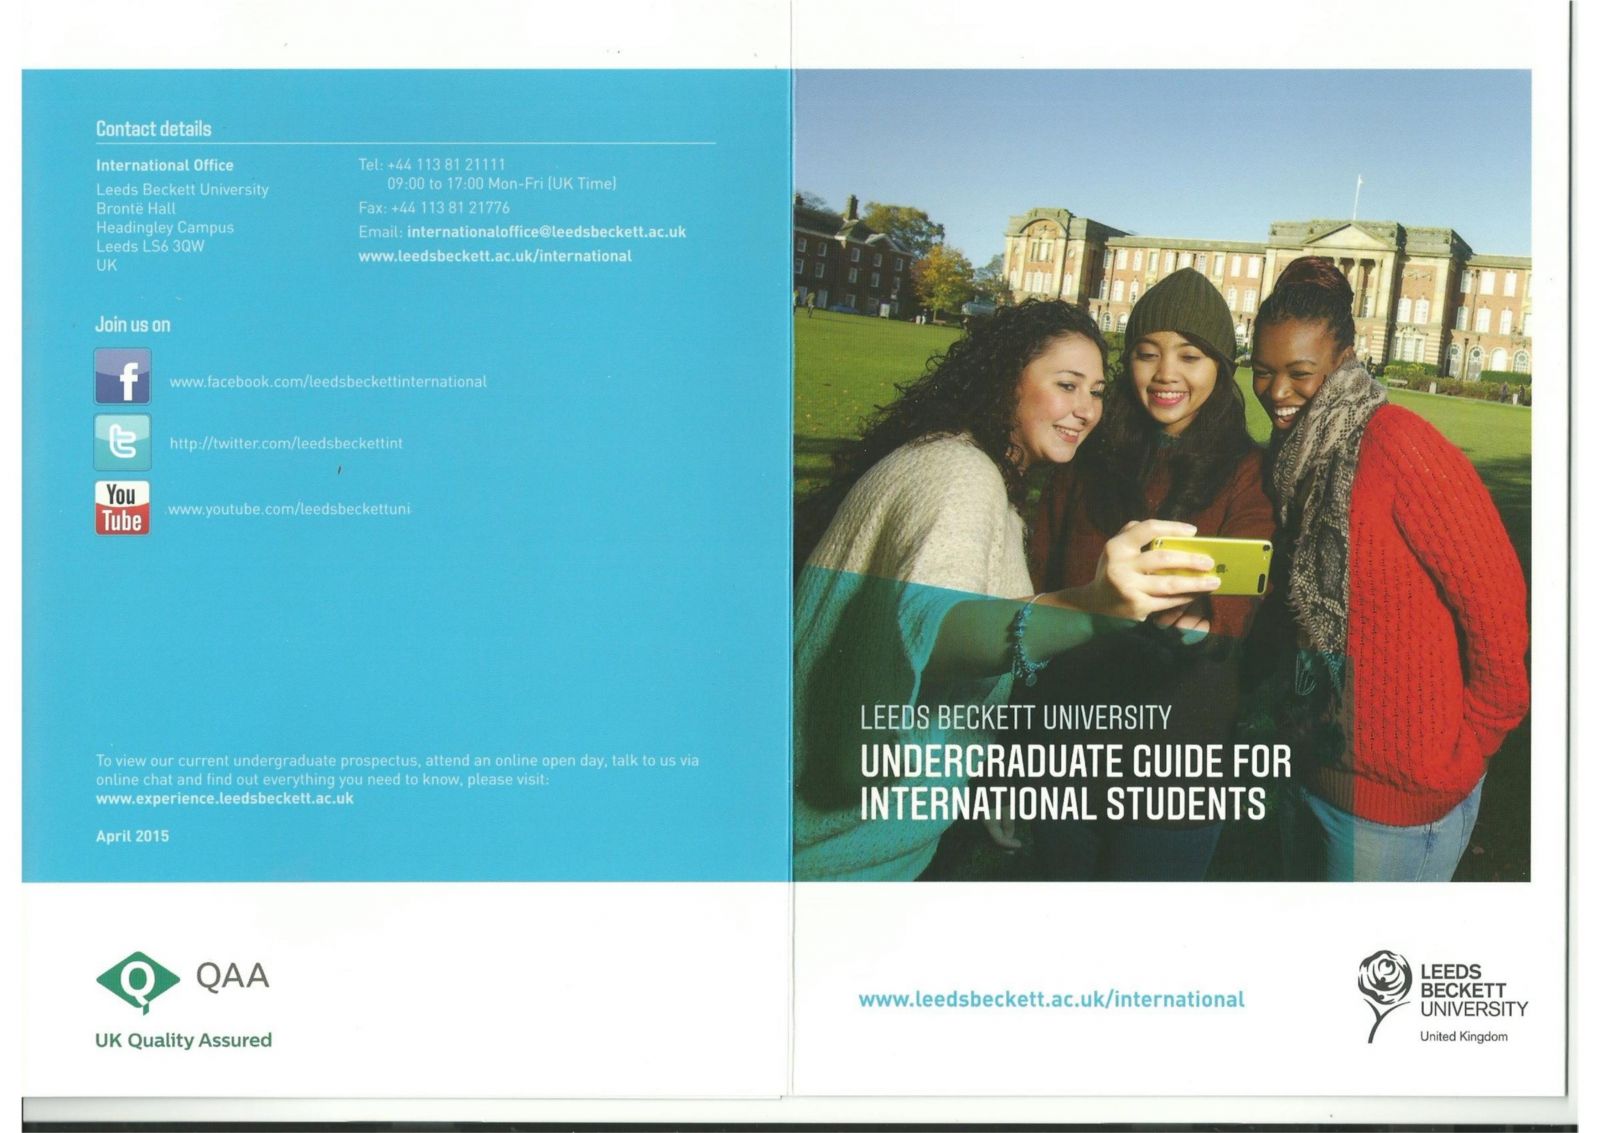 Undergraduate Guide for International Students at Leeds Beckett University, England 2016.